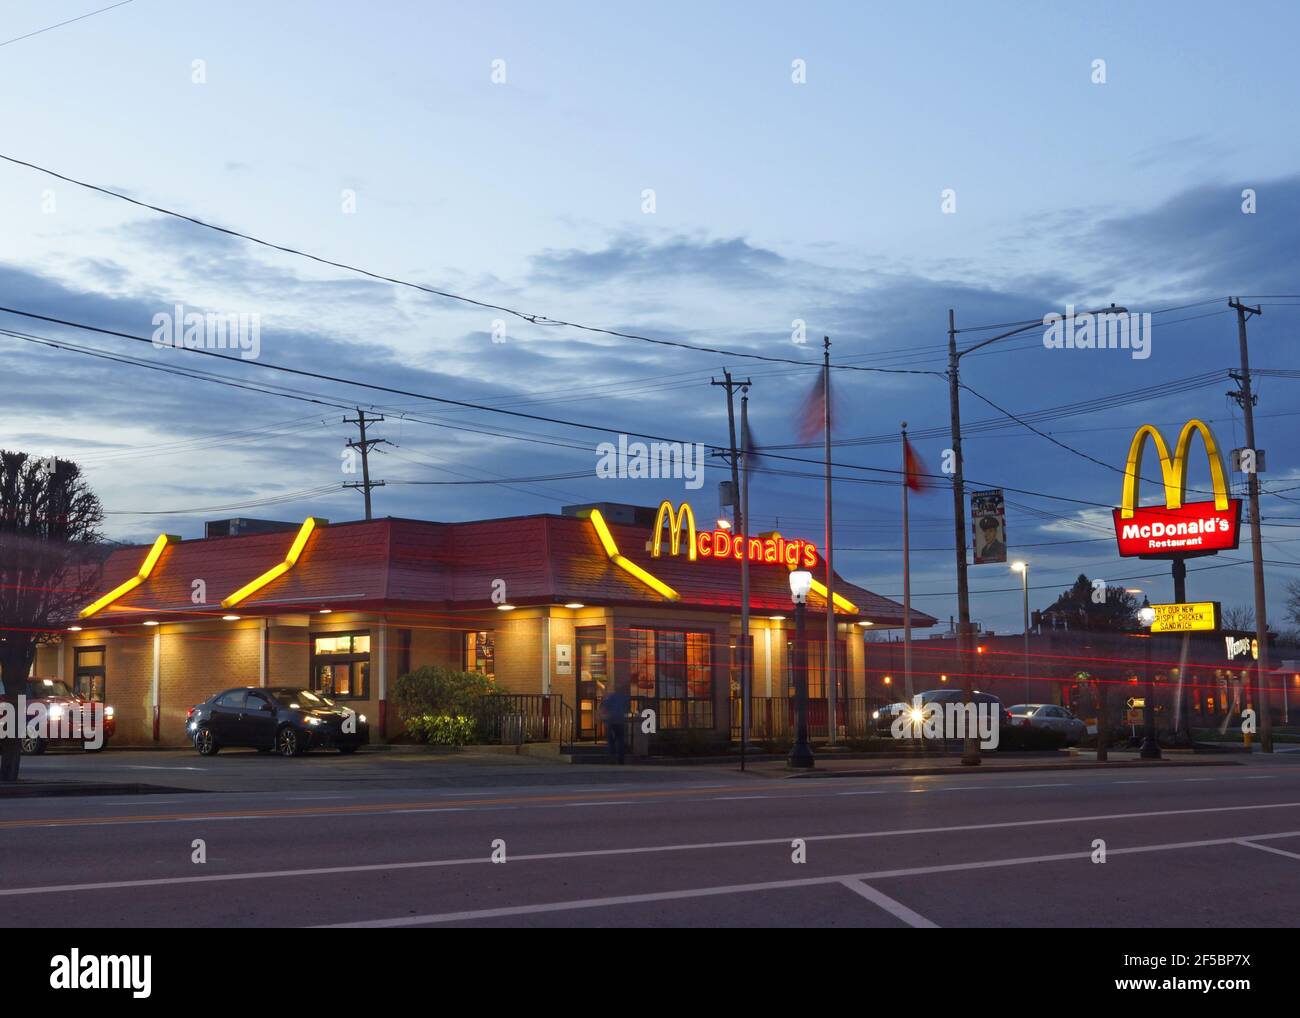 McDonald's Fast Food Restaurant at Dusk Stock Photo